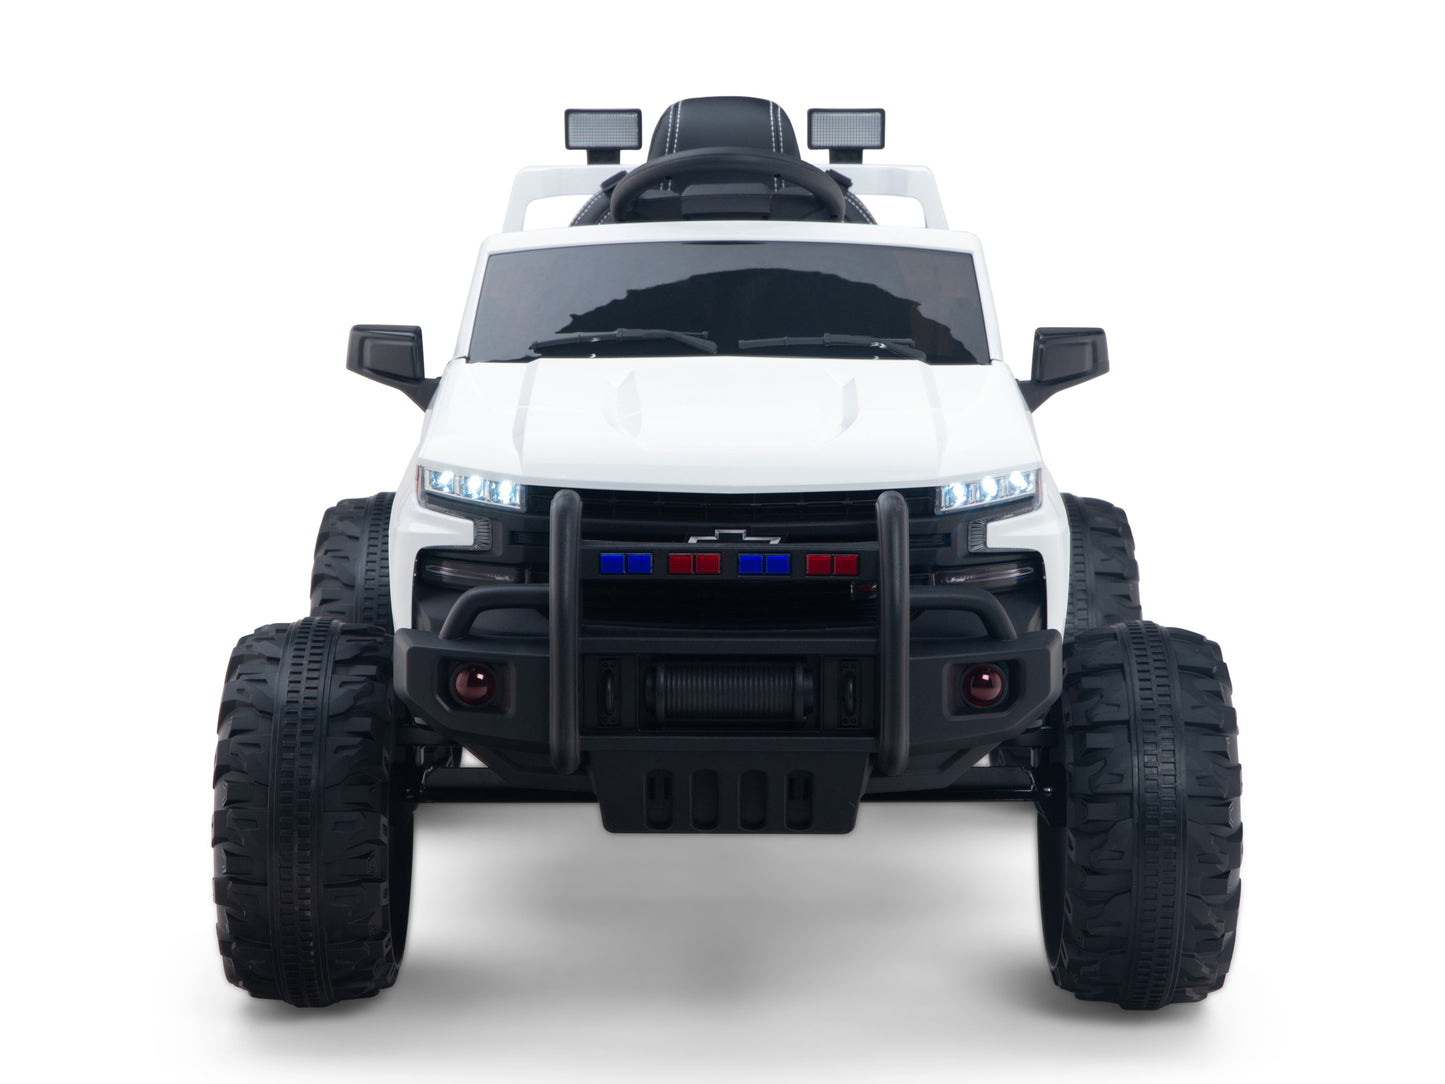 24V Chevrolet Silverado Lifted Ride On Truck with Remote Control – White